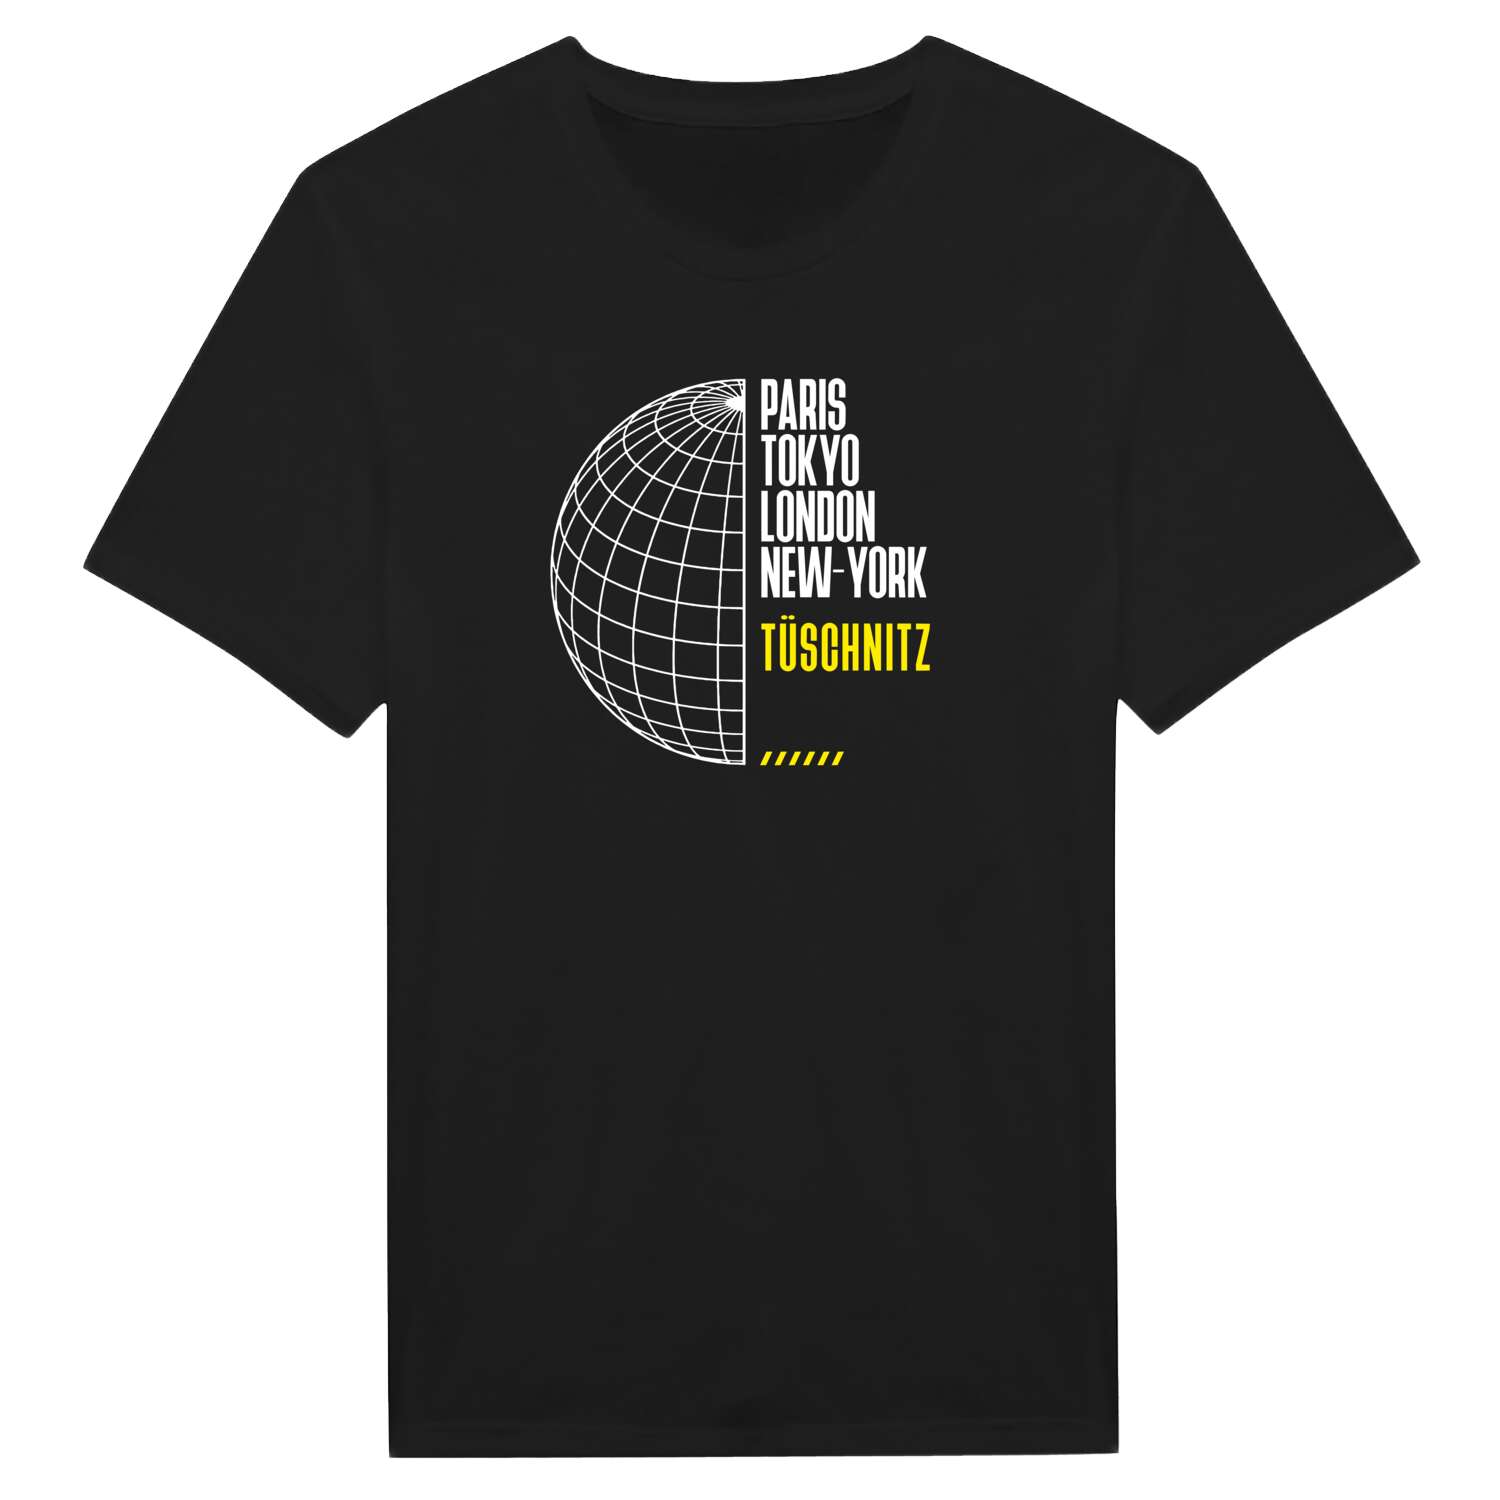 Tüschnitz T-Shirt »Paris Tokyo London«